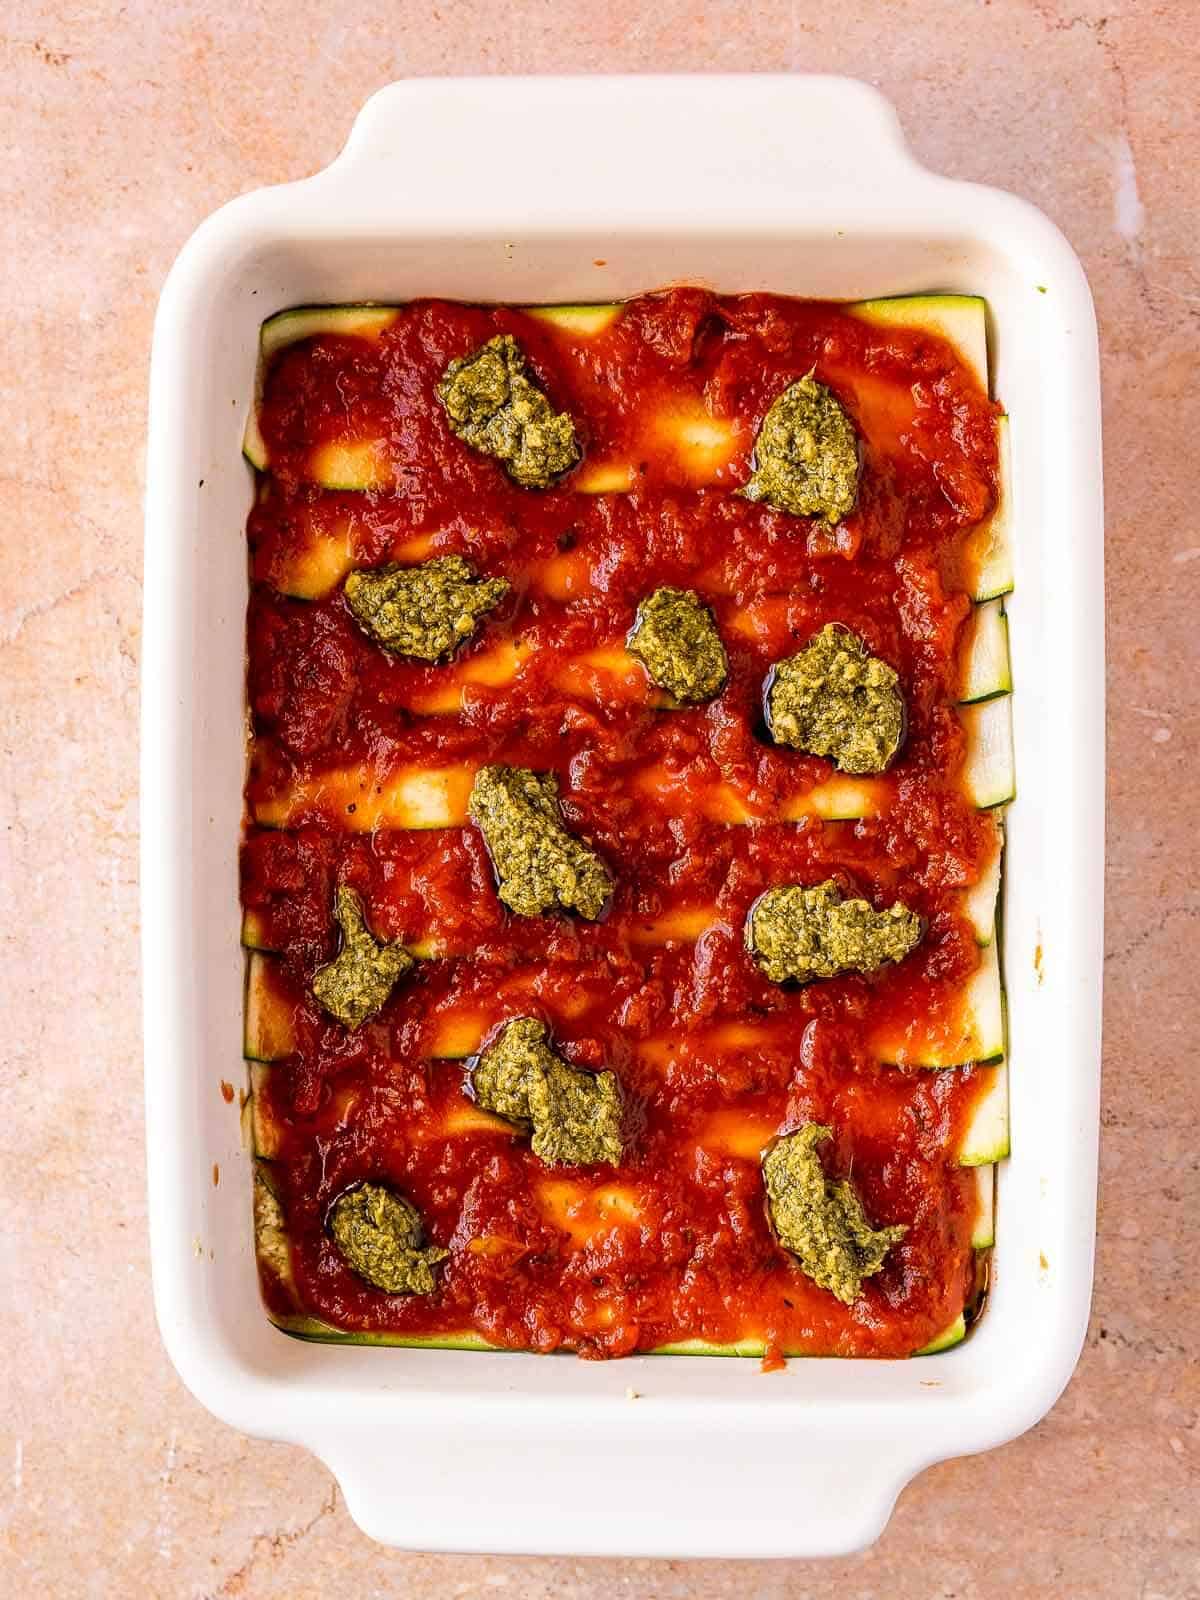 uncooked vegan zucchini casserole with vegan pesto dollops on top.